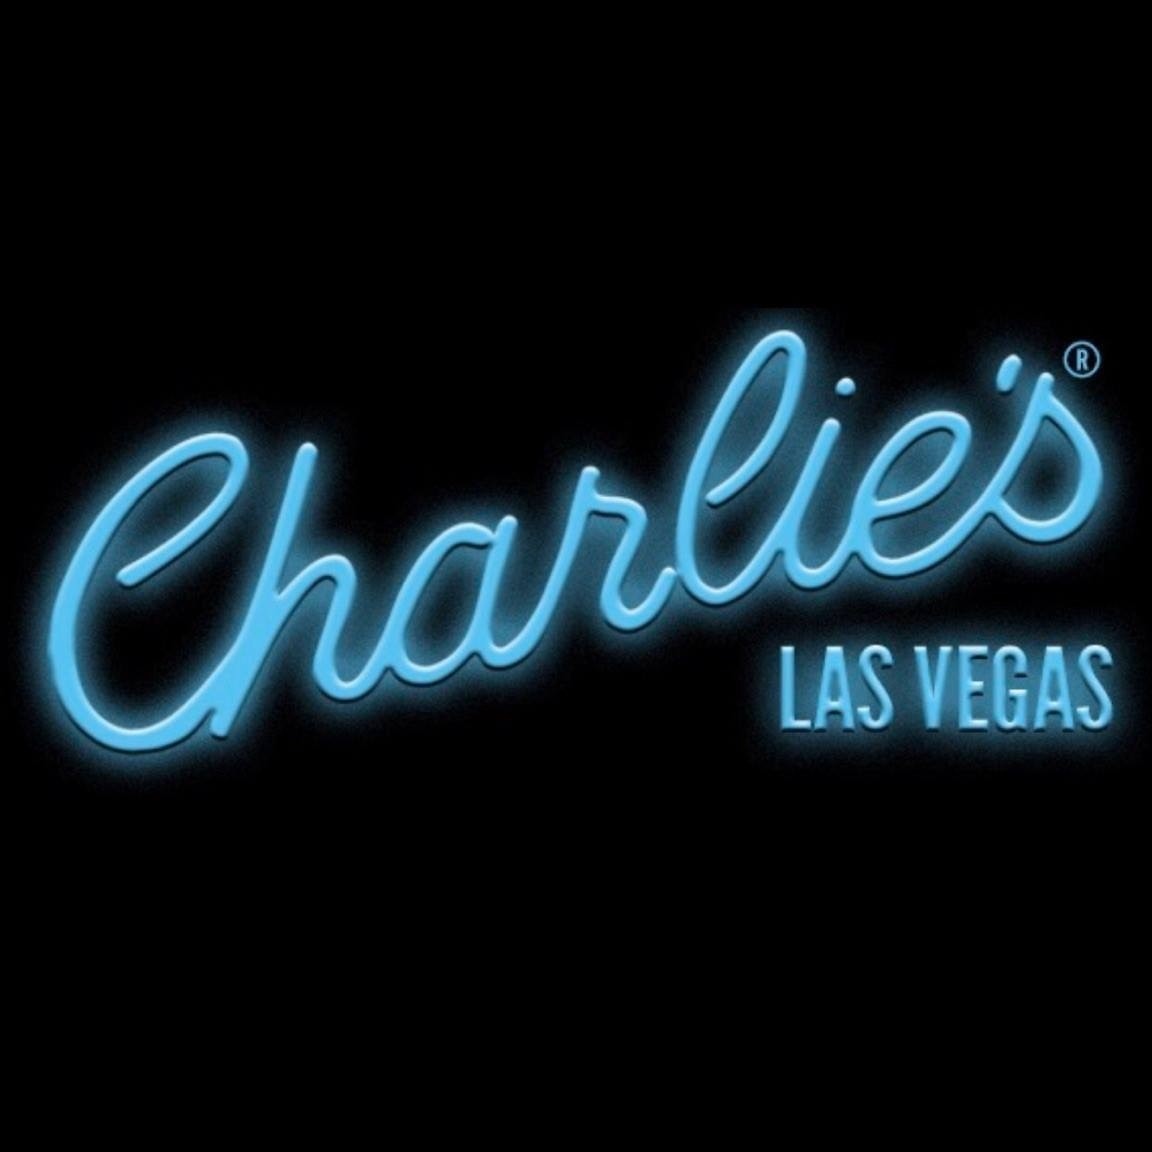 Charlie's Las Vegas